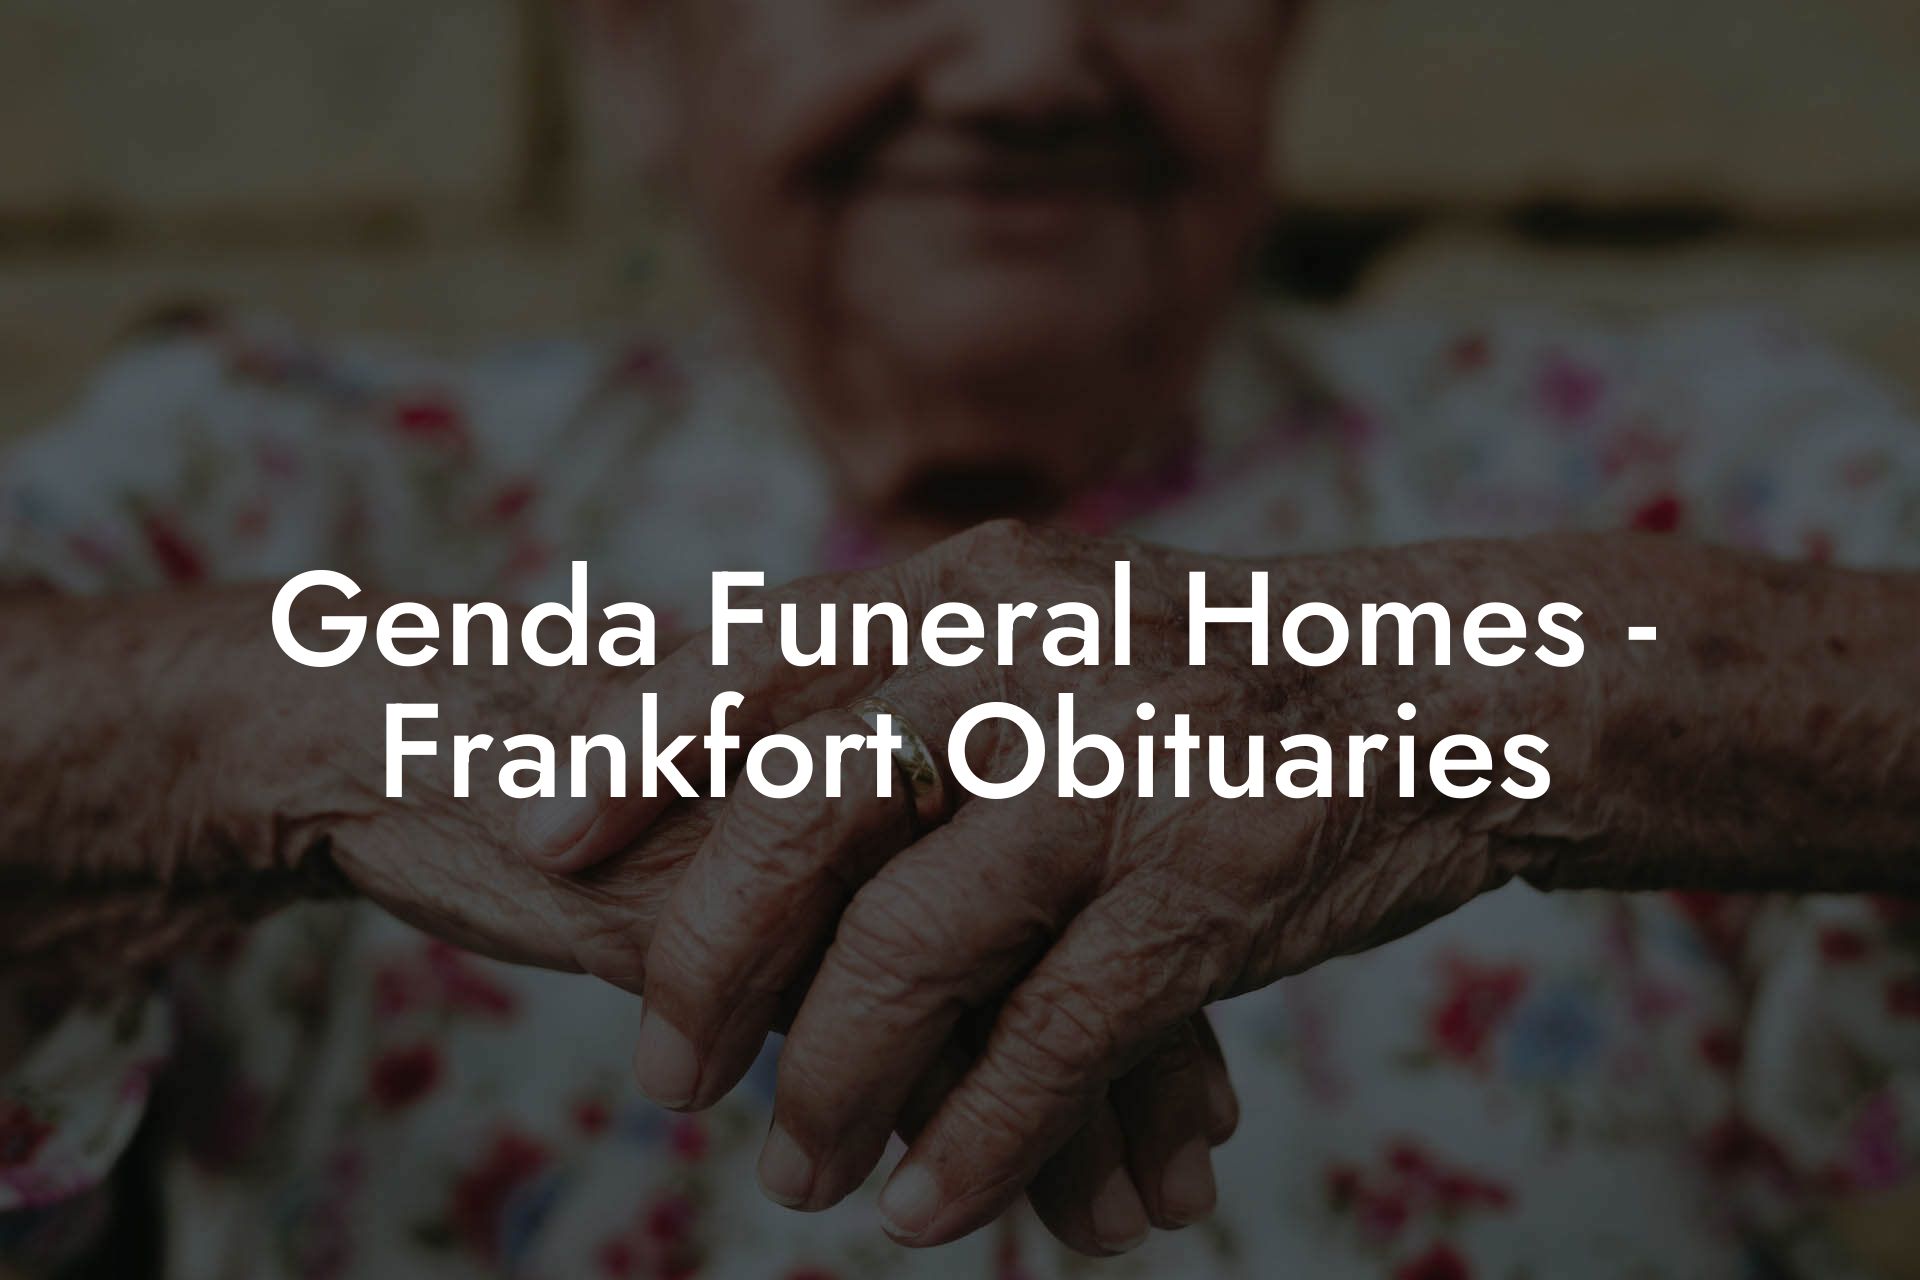 Genda Funeral Homes - Frankfort Obituaries